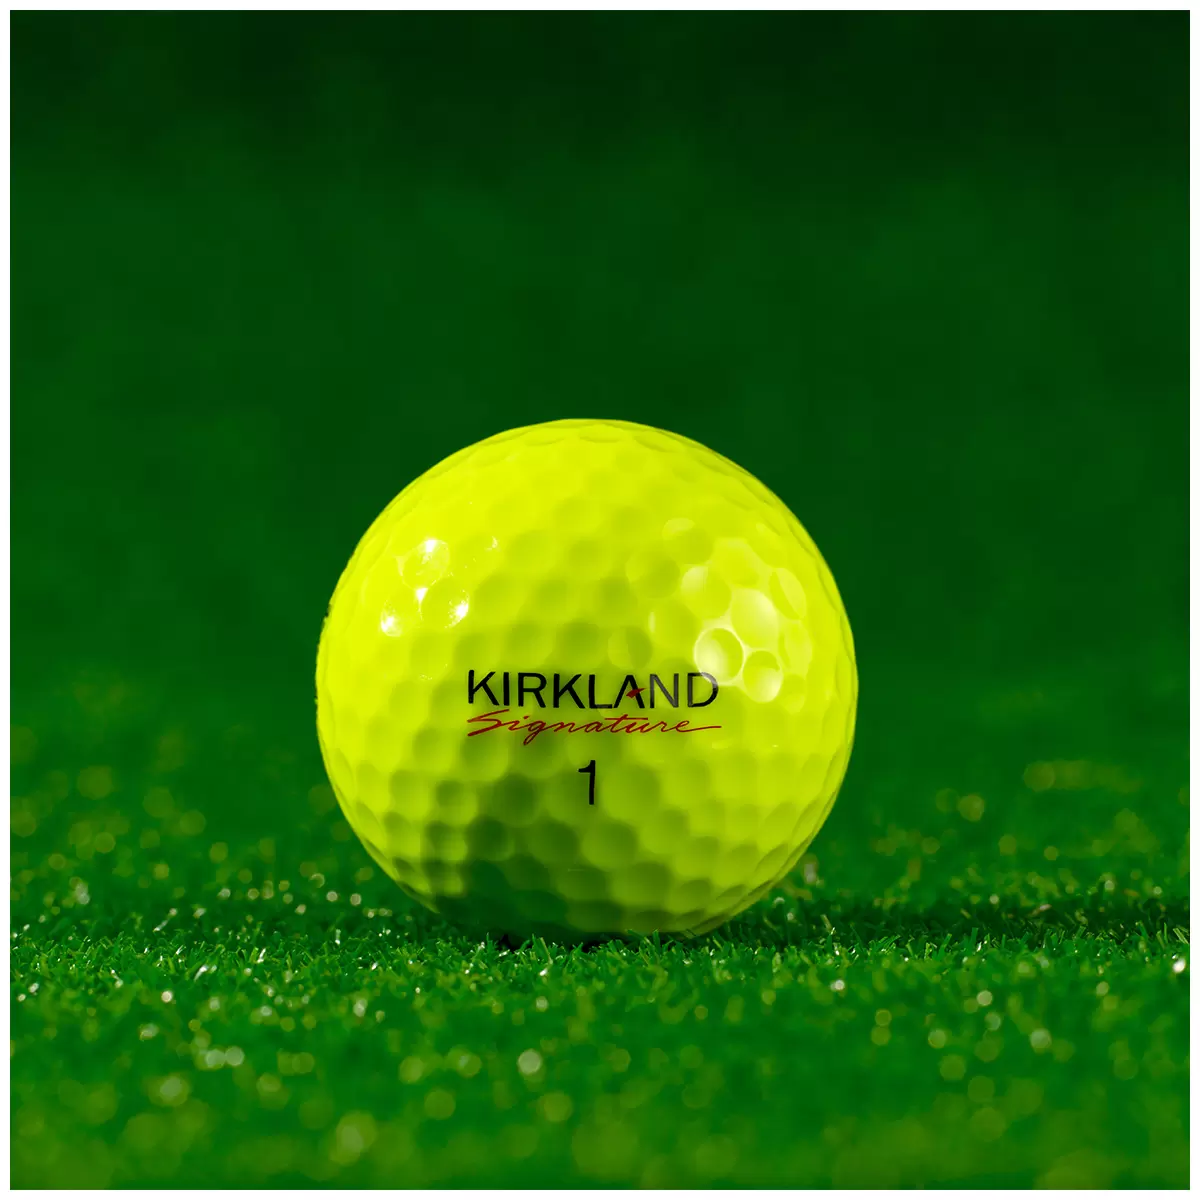 Kirkland Signature Performance + Yellow Golf Ball 24 Pack